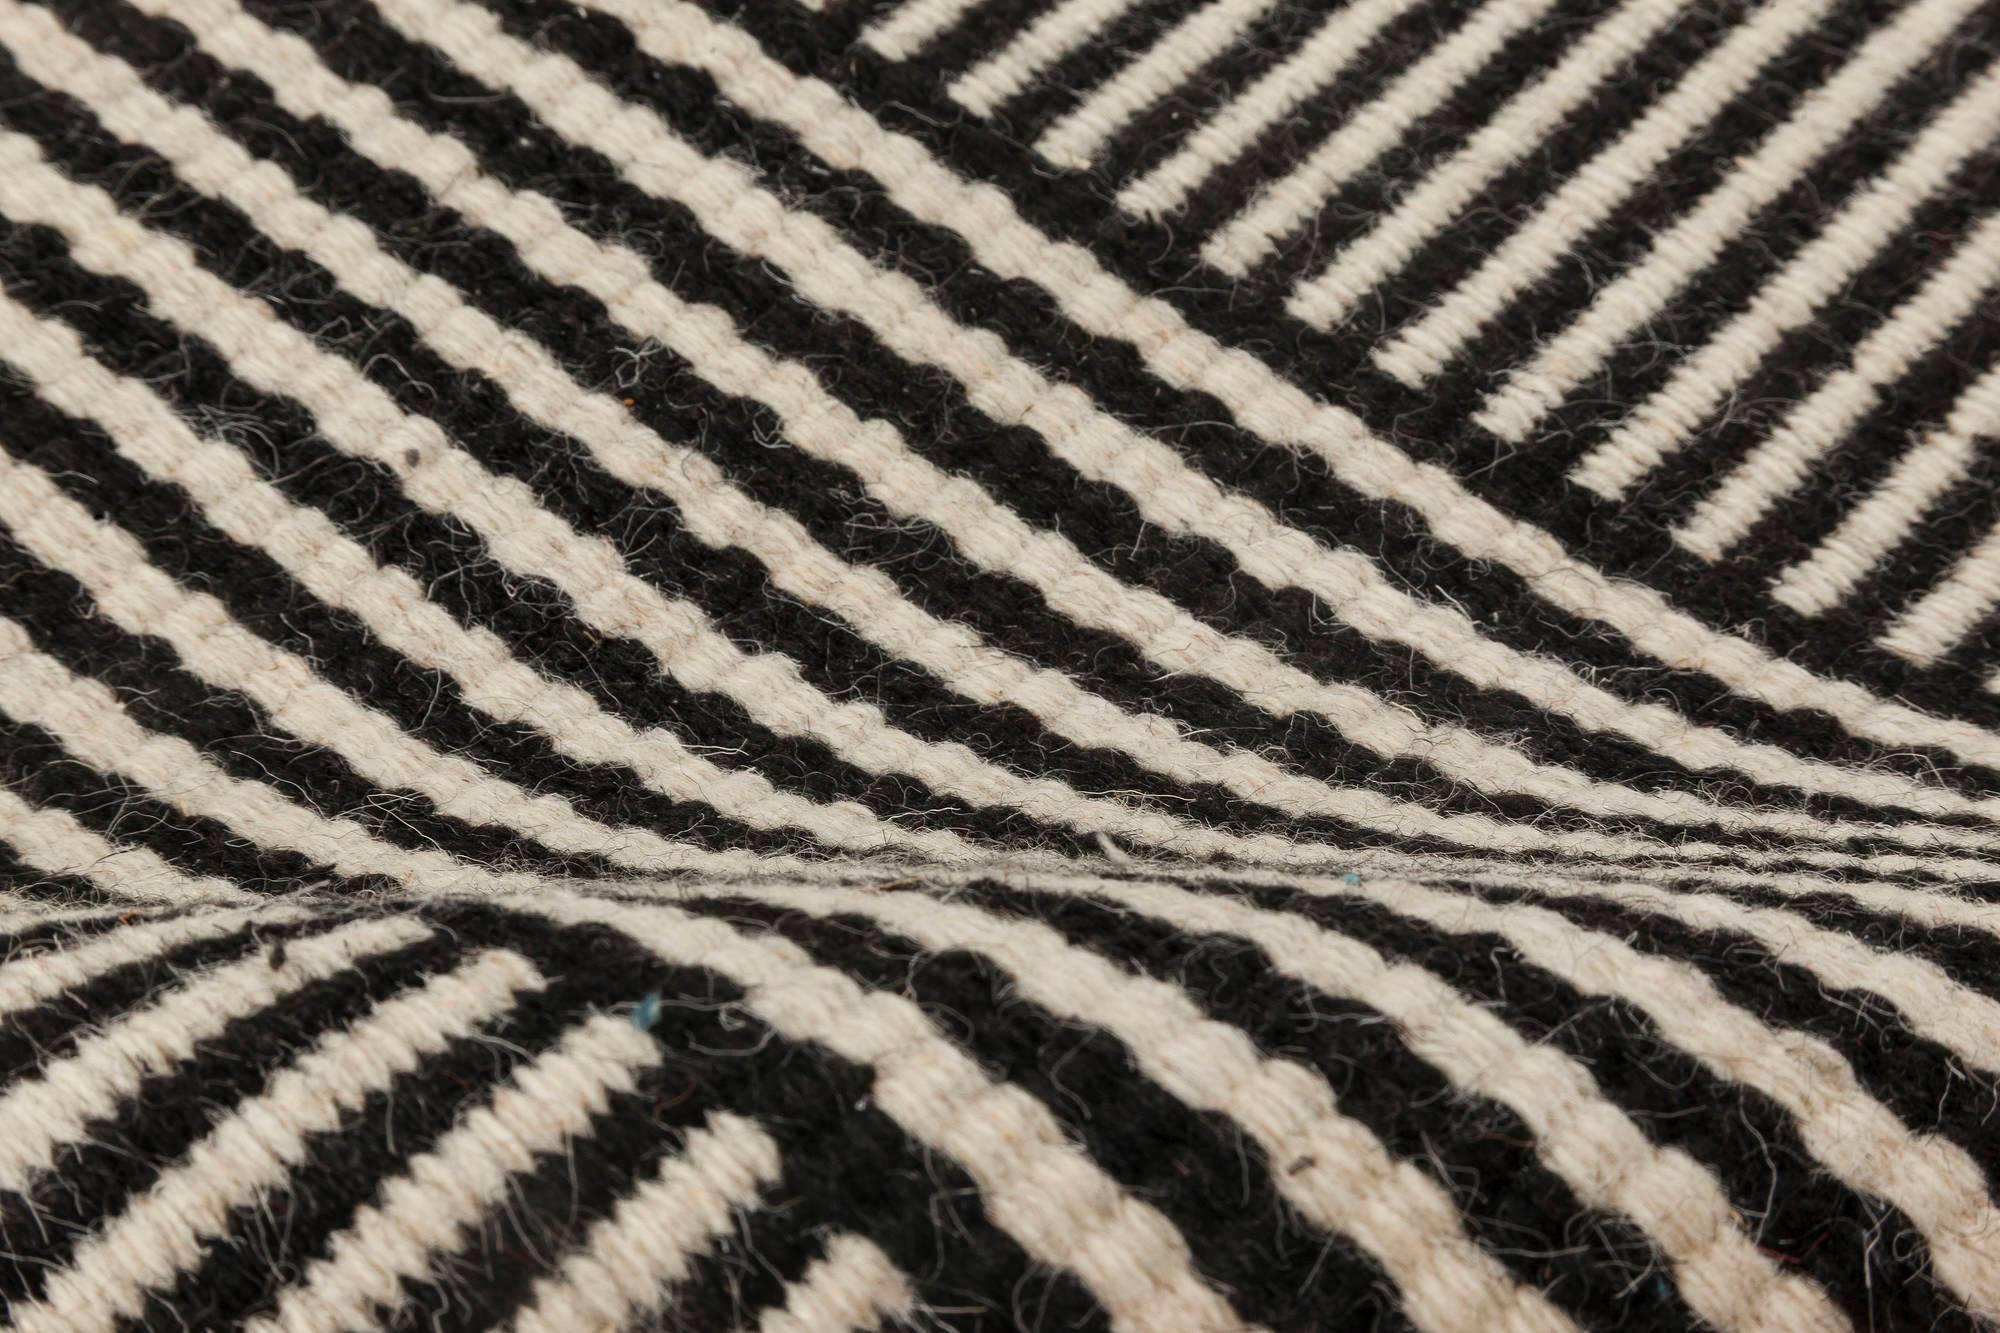 Custom Modern striped flat-woven wool rug in black & white by Doris Leslie Blau
Size: 9'0